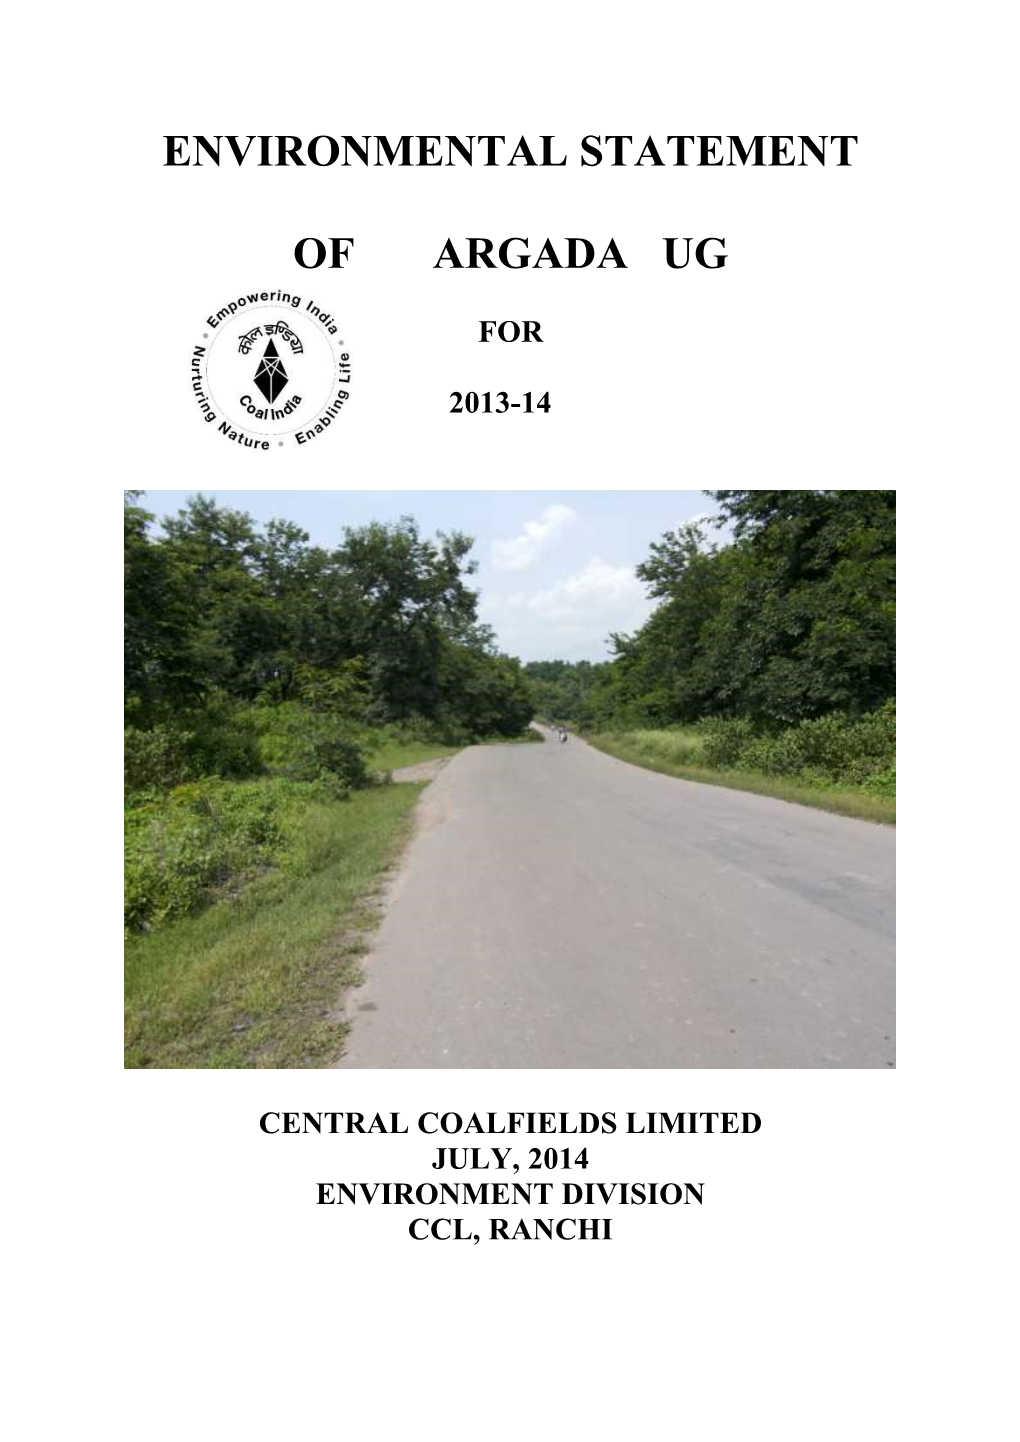 Environmental Statement of Argada Ug